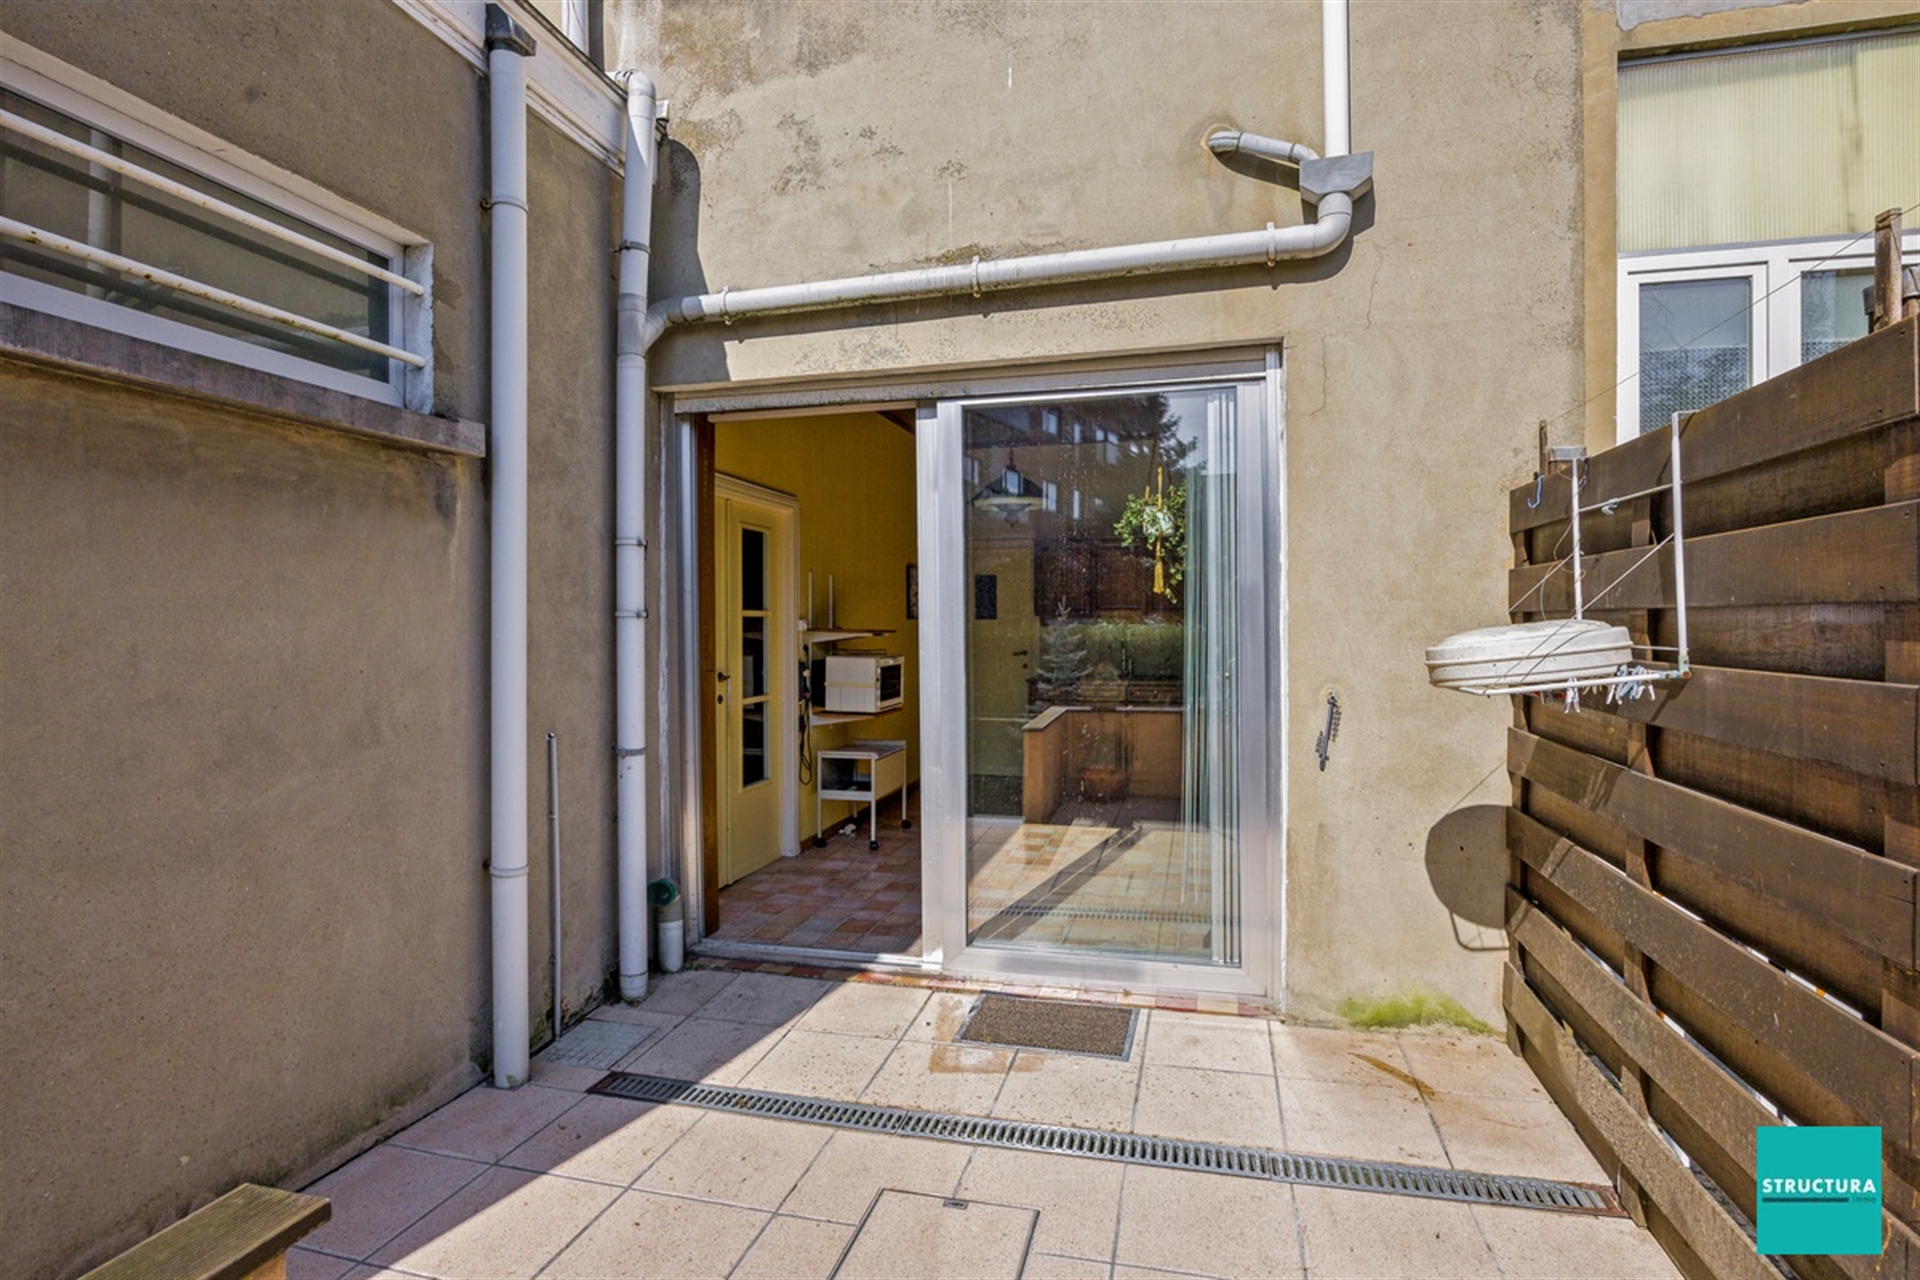 Gelijkvloers appartement met tuin te koop in SINT-AGATHA-BERCHEM


. foto 13